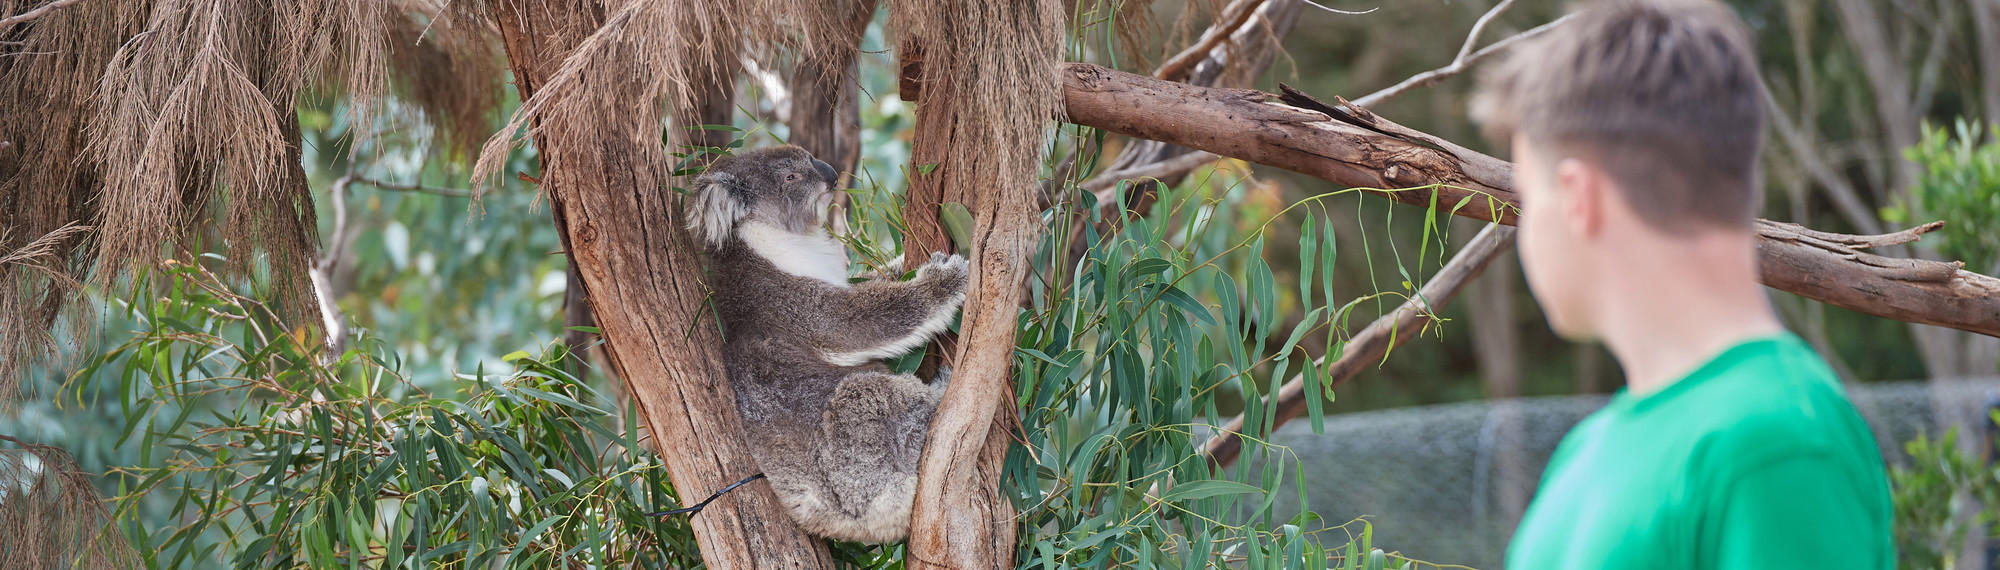 A school aged boy looks at a koala sitting in a fork in a tree